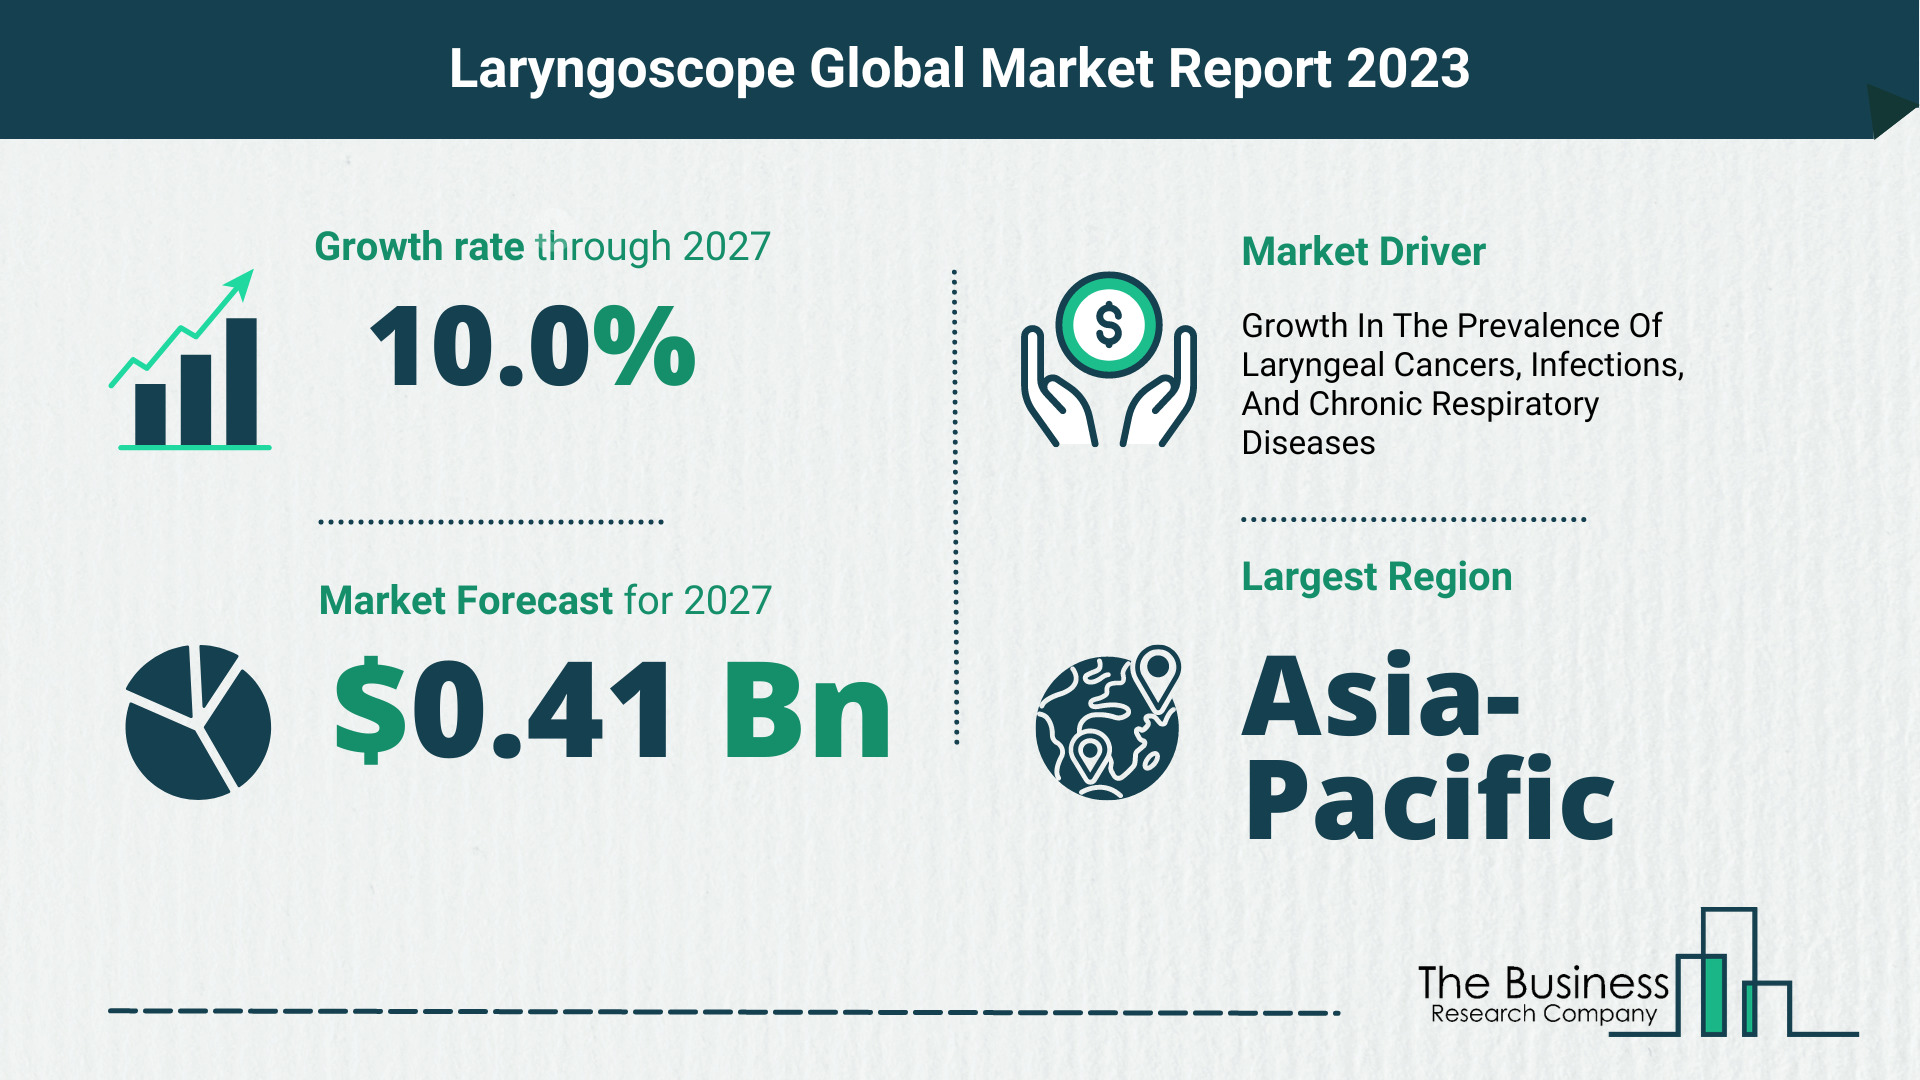 Global Laryngoscope Market Opportunities And Strategies 2023